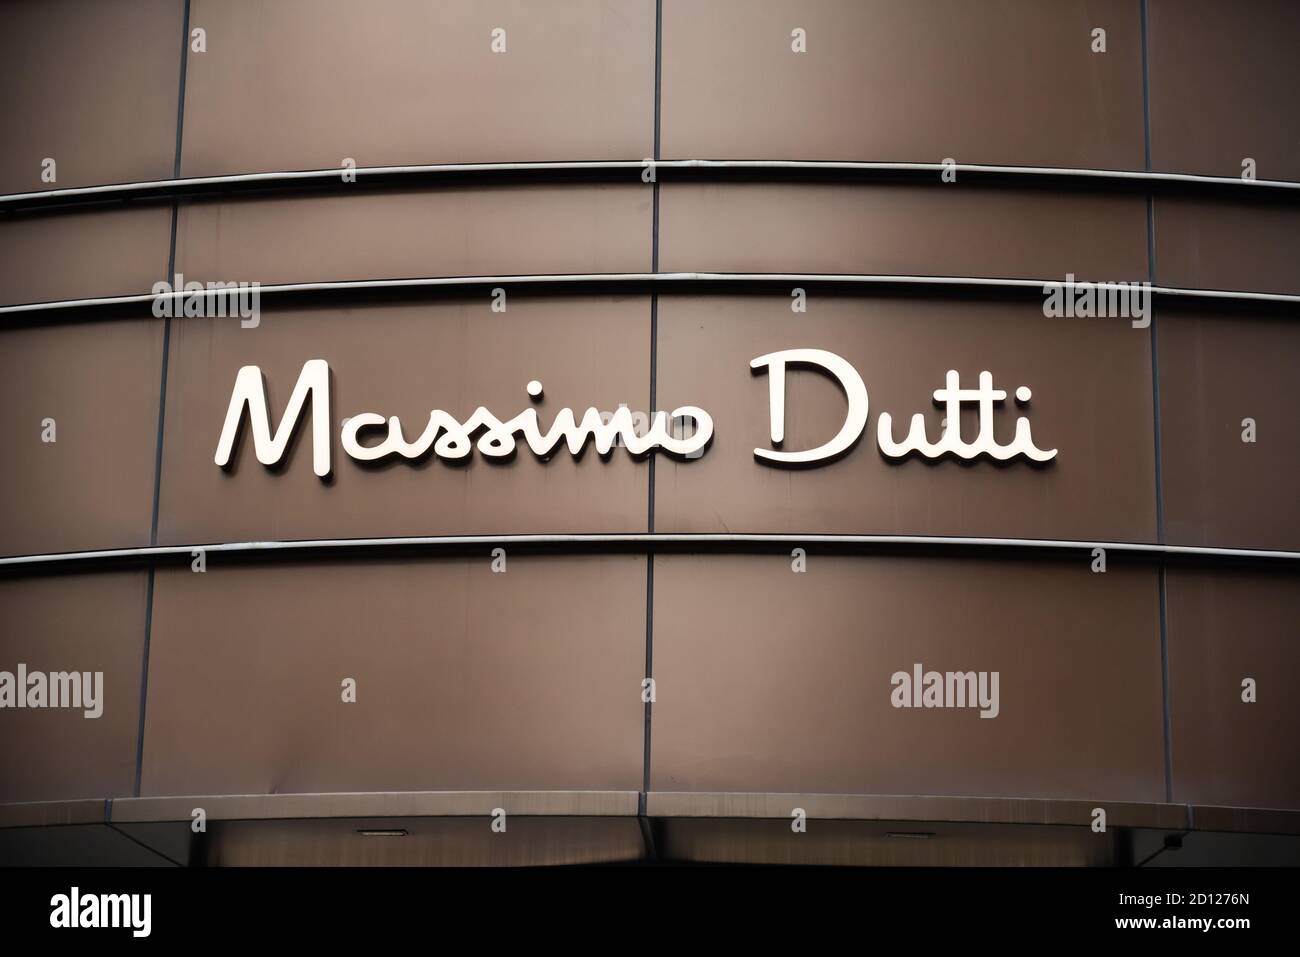 Massimo Dutti logo seen in Shenzhen Stock Photo - Alamy